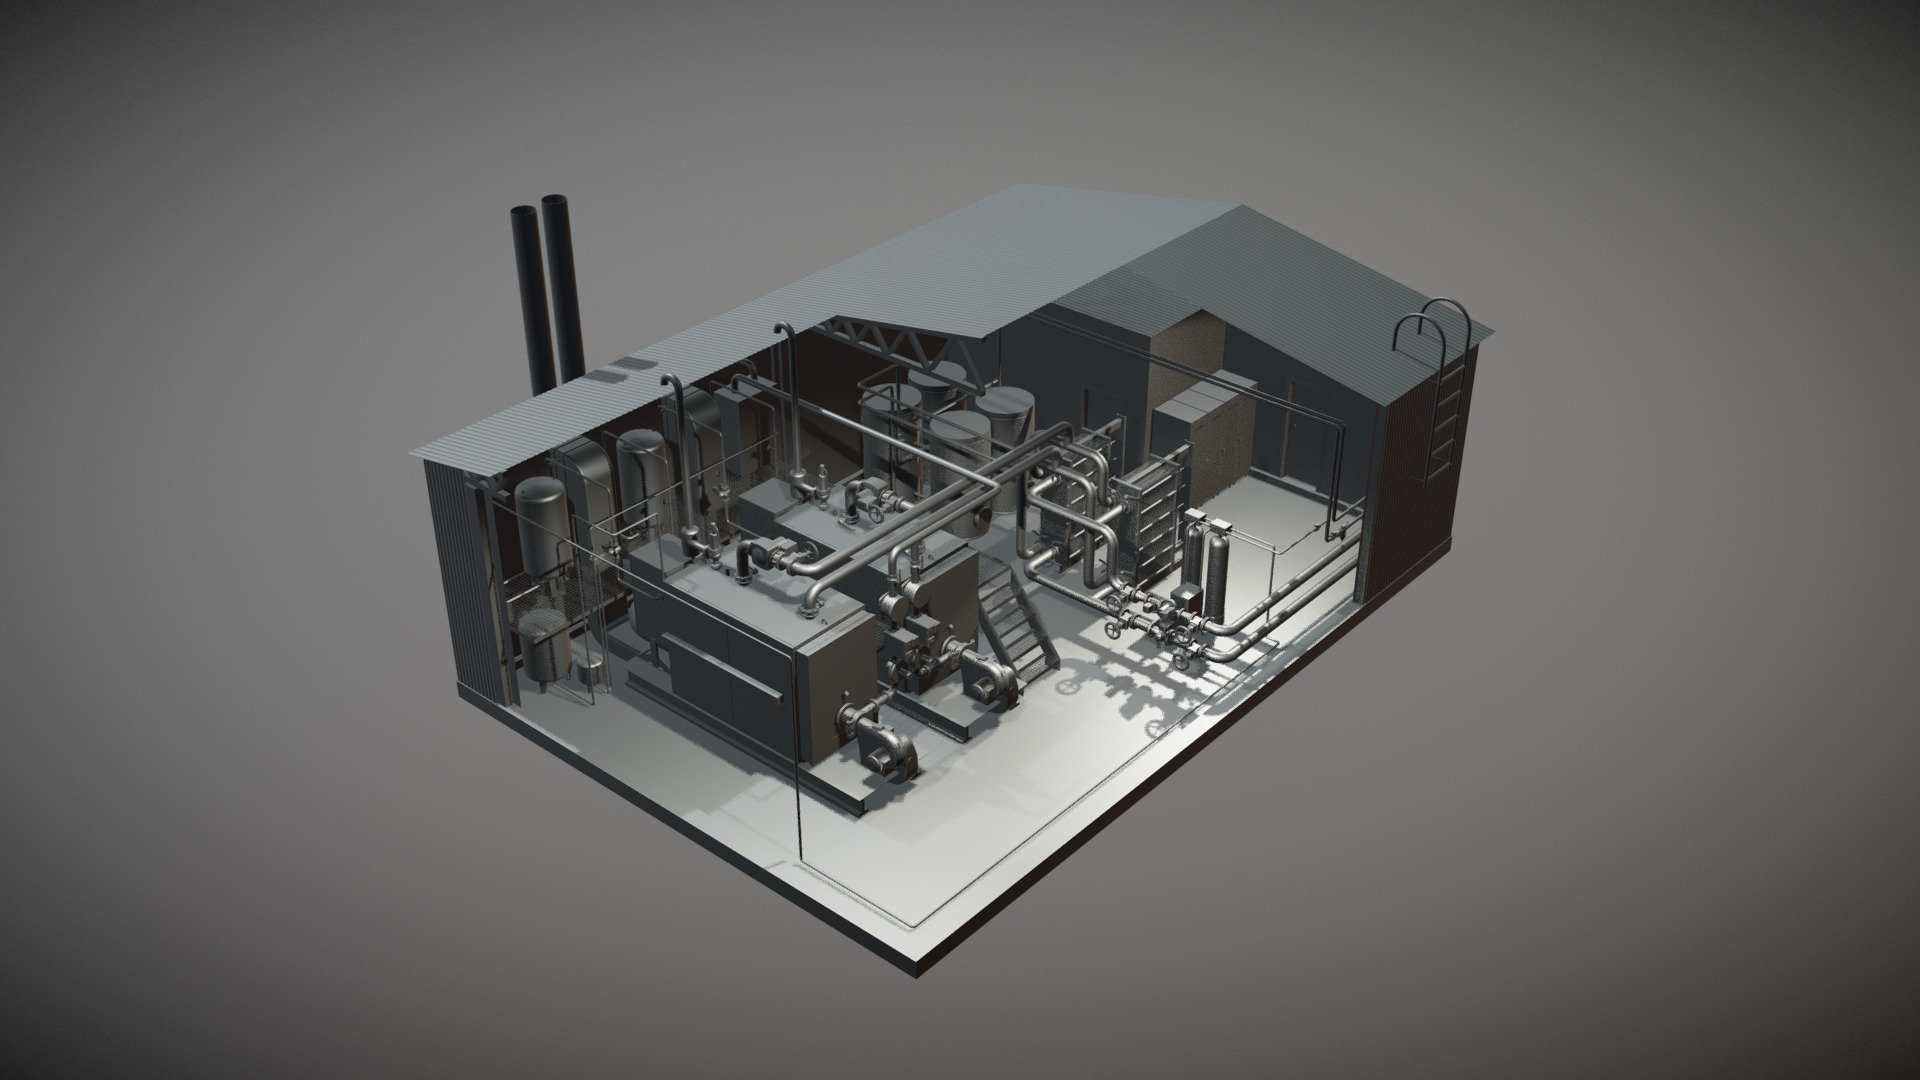 Boiler Room 3d Model By Adeptus Adeptice E3ad4d5 Sketchfab 0432